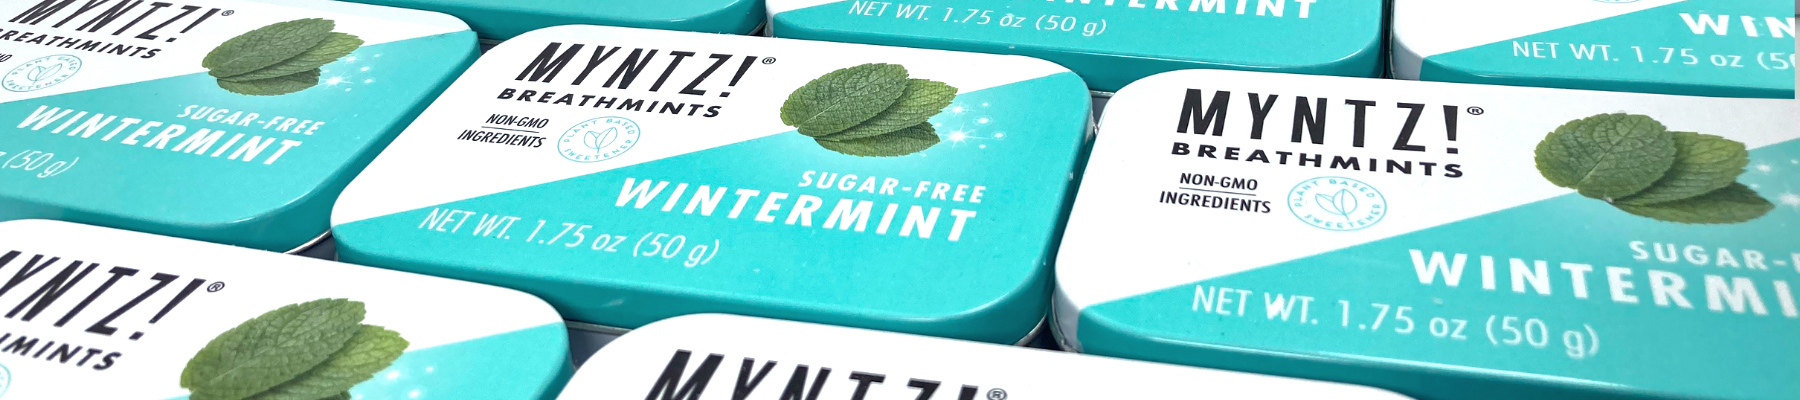 Myntz! Breathmints new Non-GMO sugar-free formula